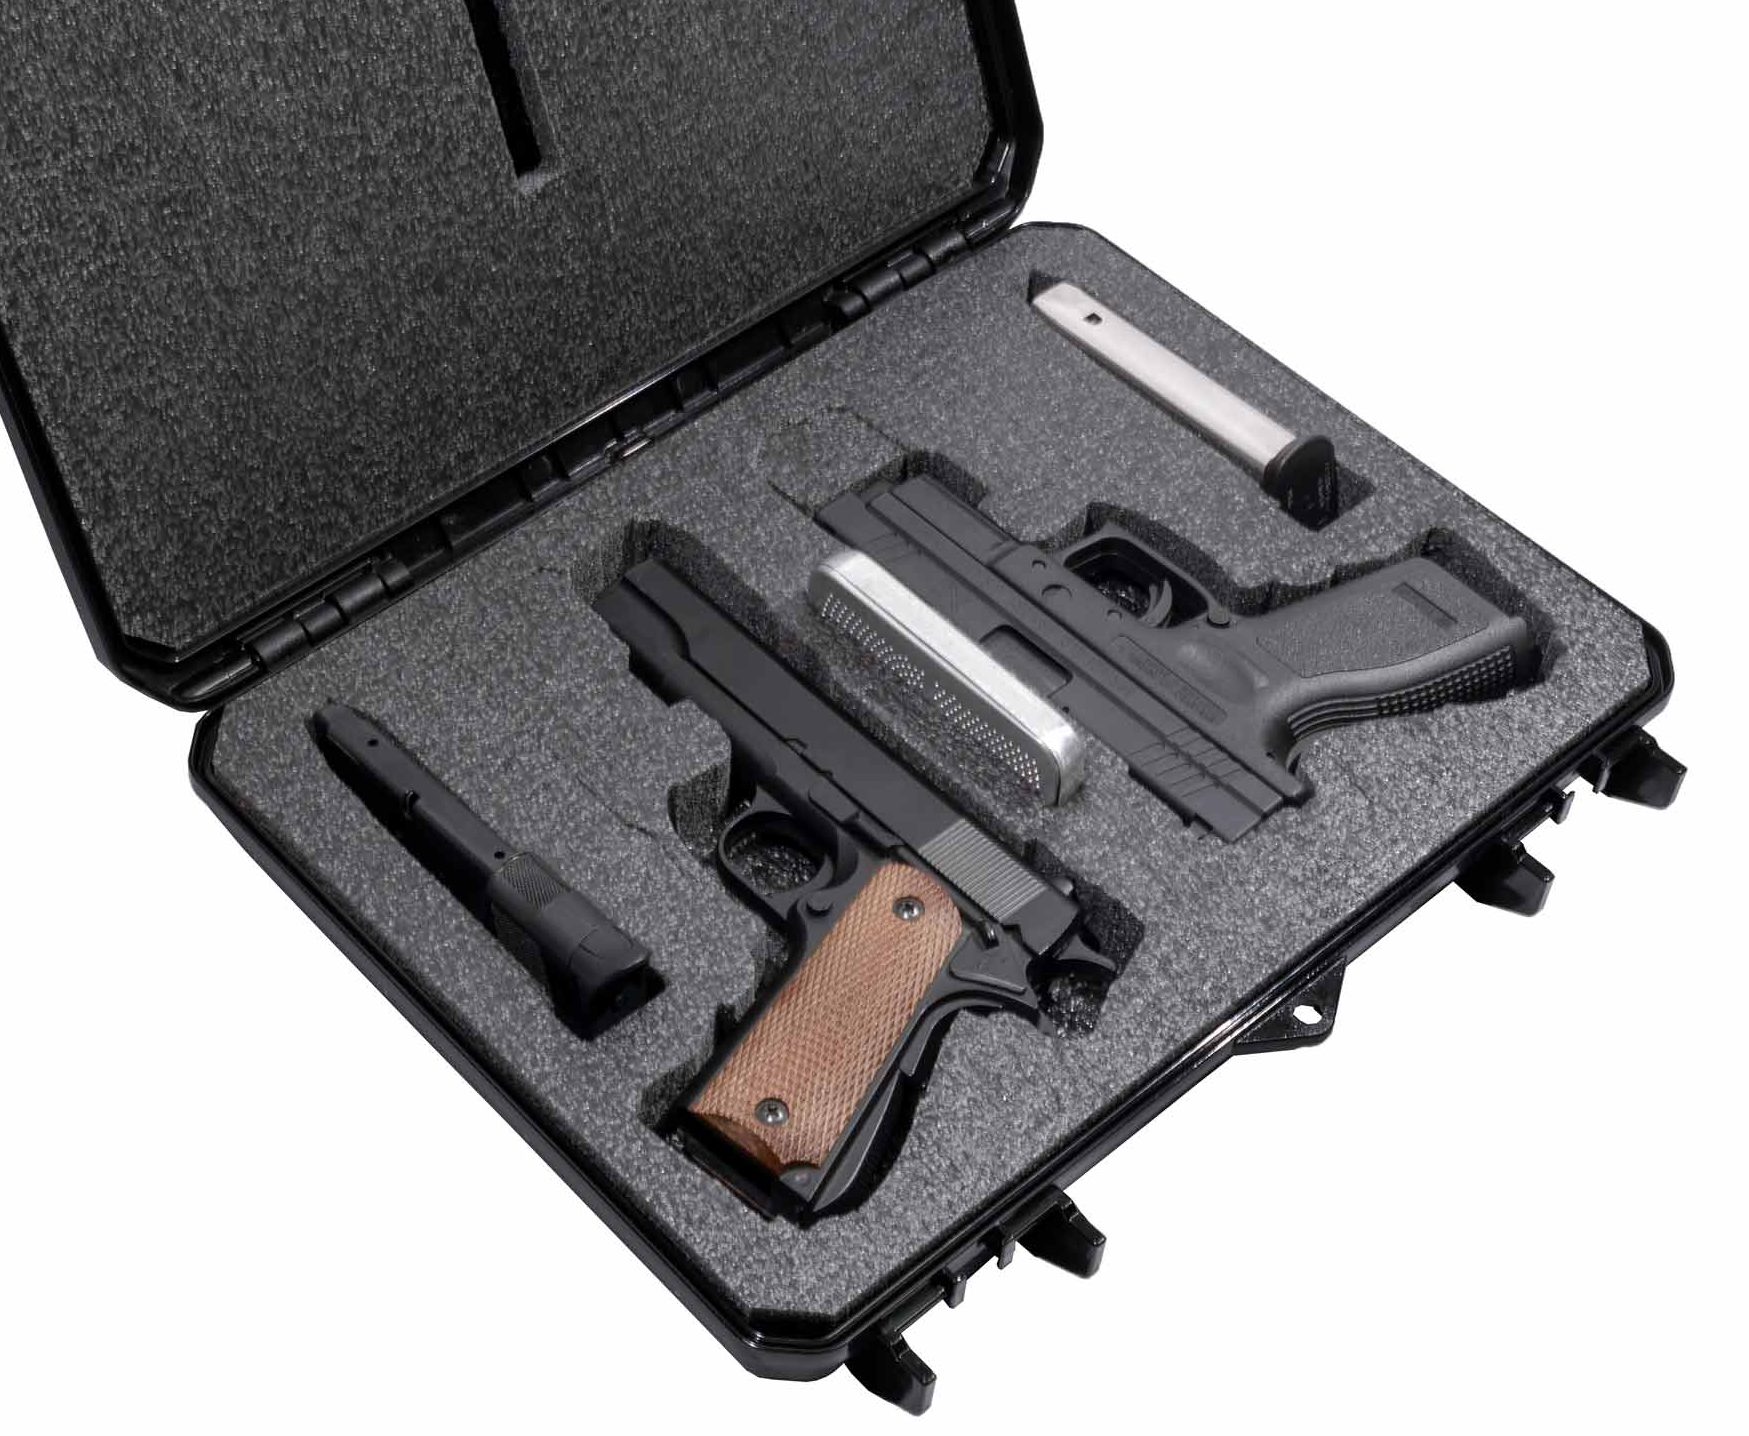 Ruger Lockable Pistol Case Fits Most Pistols Hard Plastic w/ Foam 12 x 9 x 3.75 